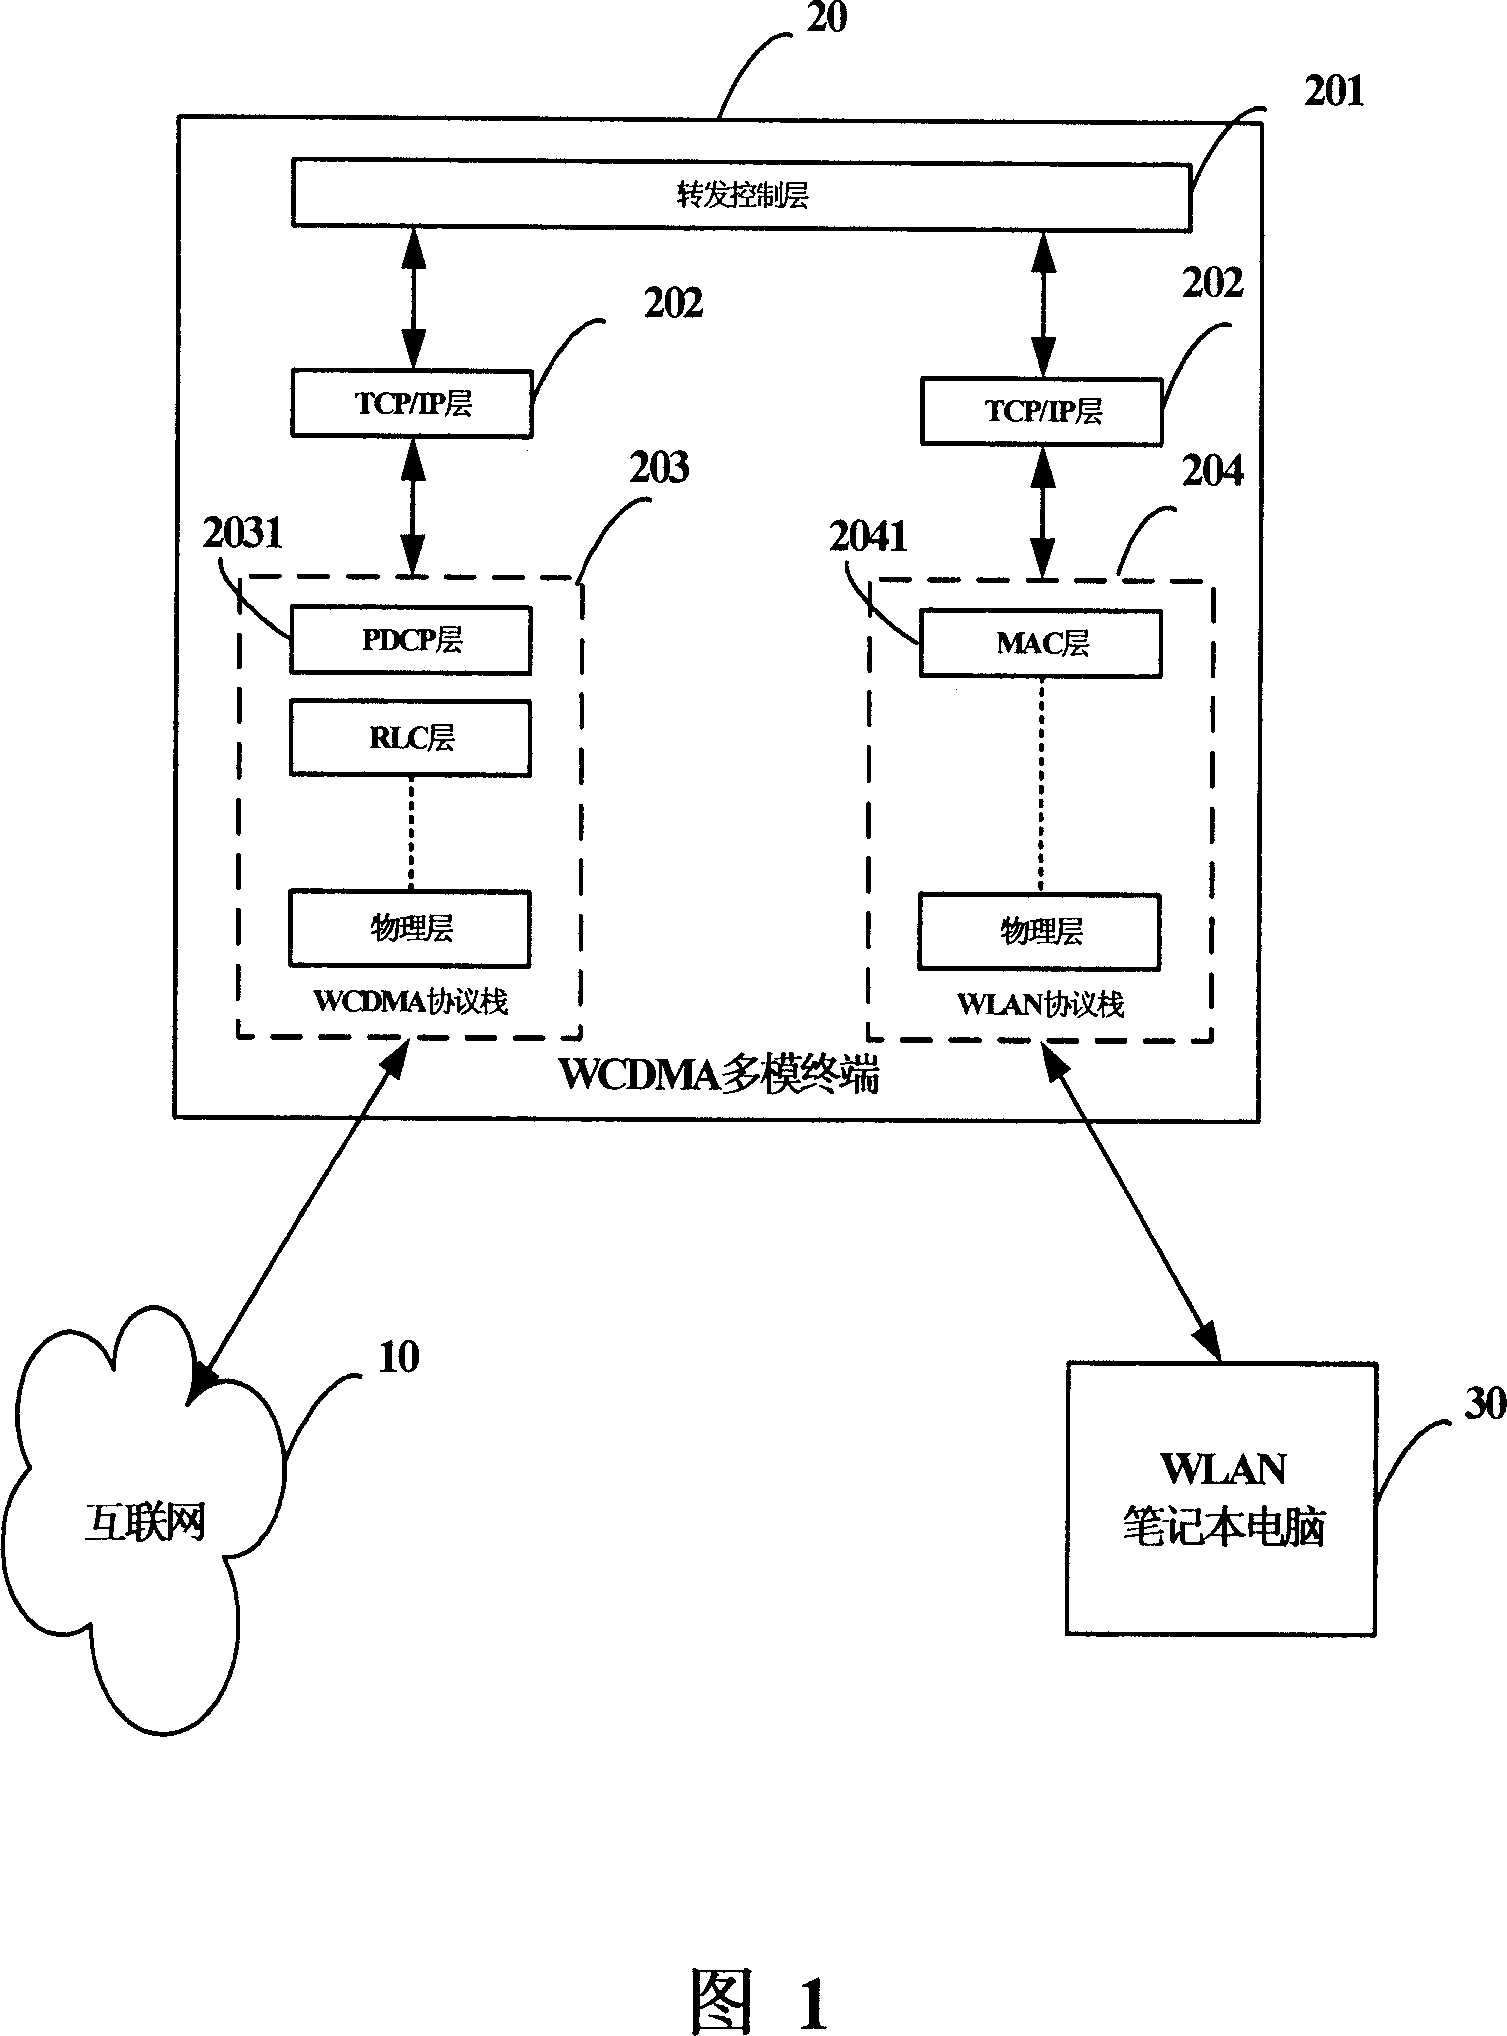 Multi-mode terminal and data forwarding method